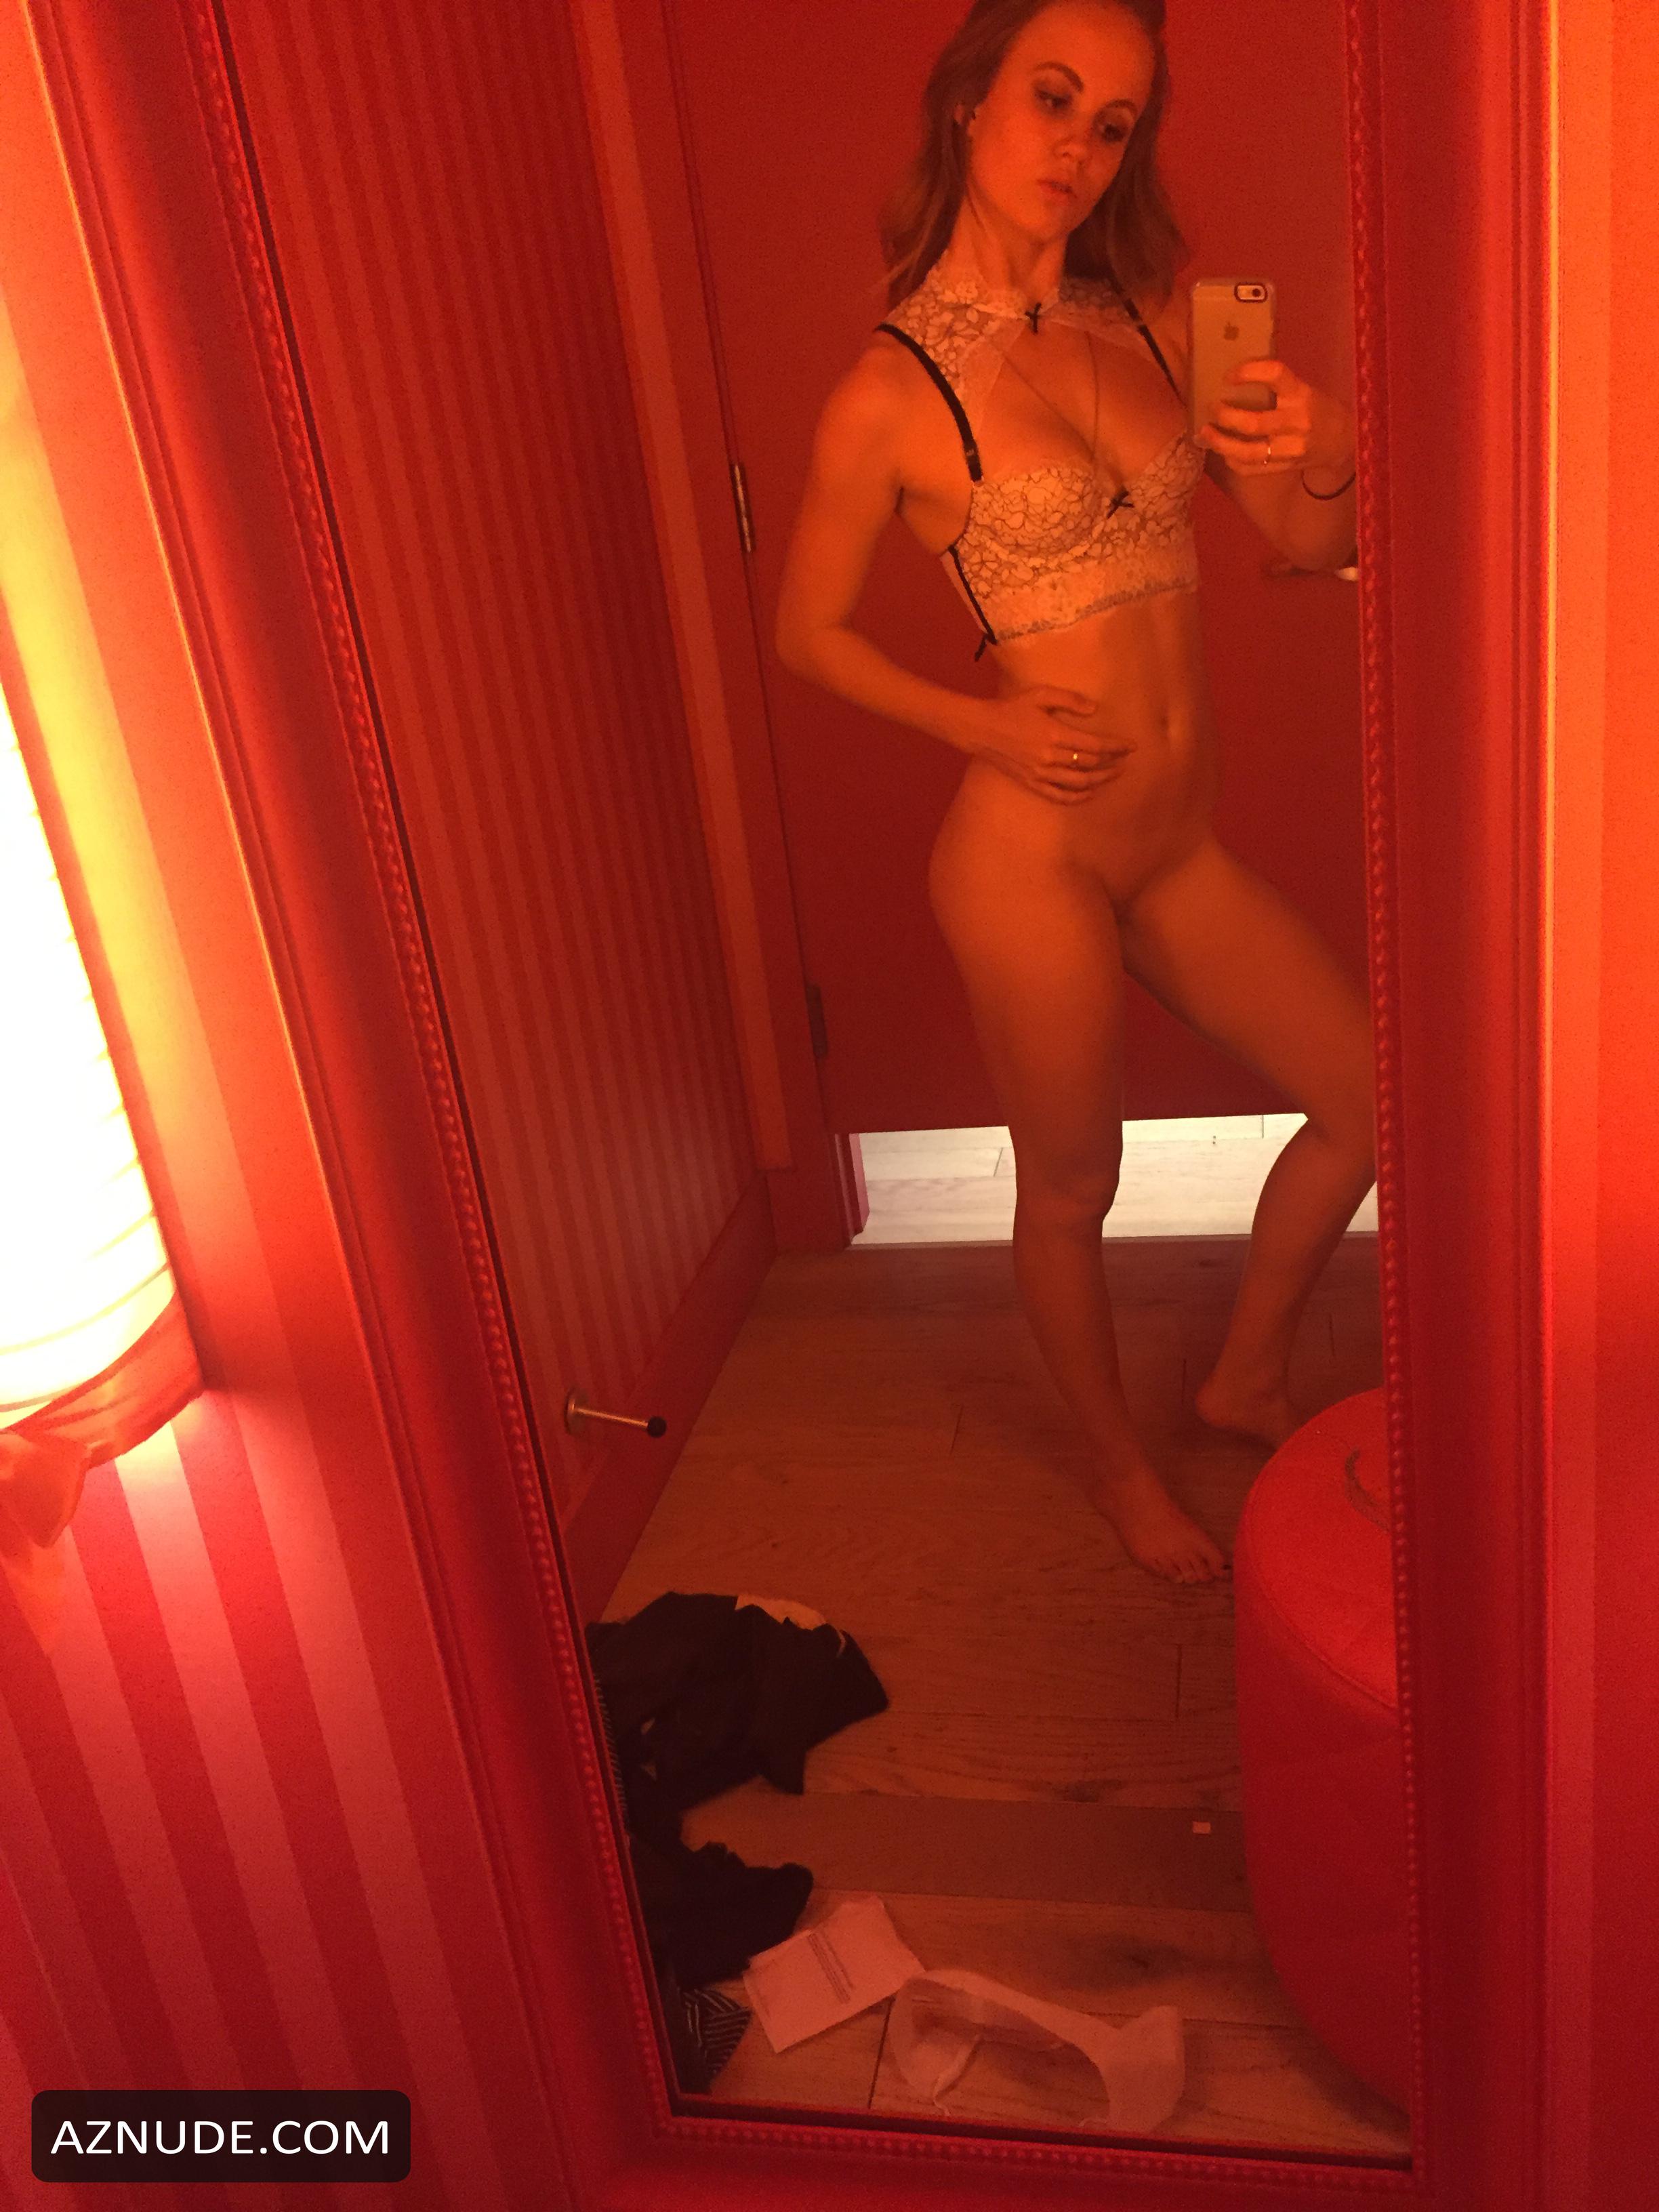 Madison lintz topless